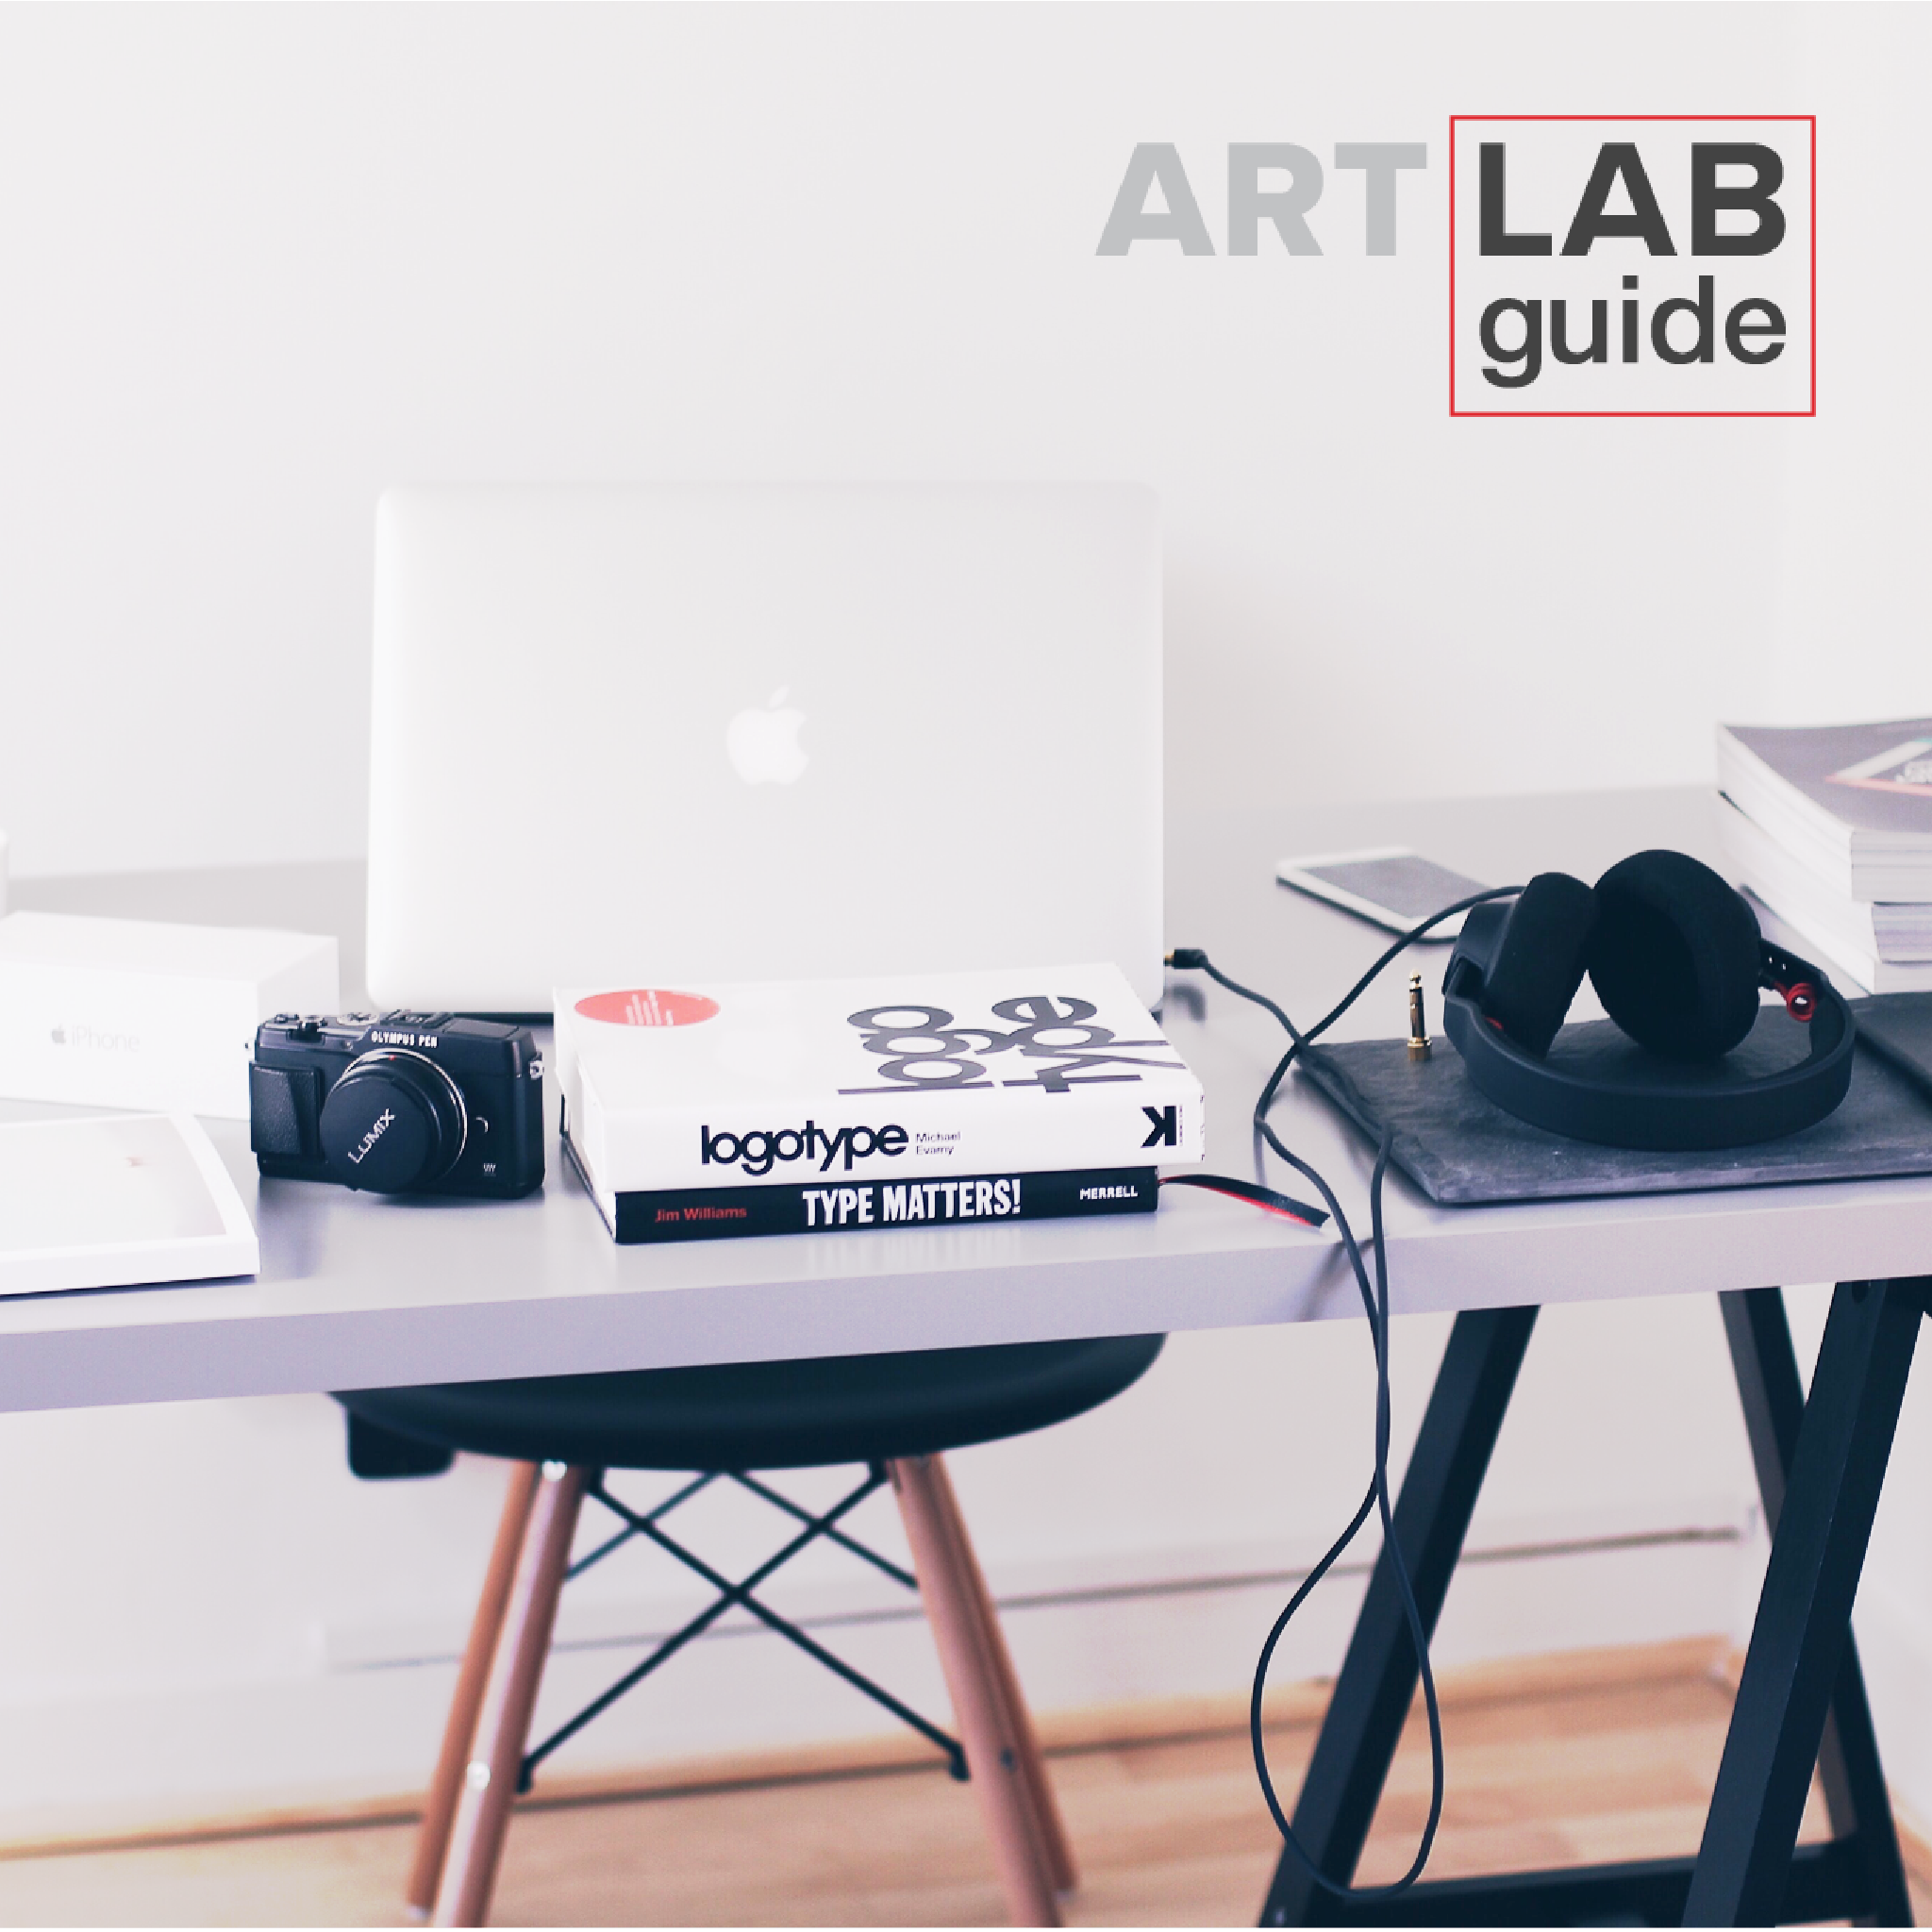 art-lab-guide-creative-inspiration-header-with-creative-studio-work-station